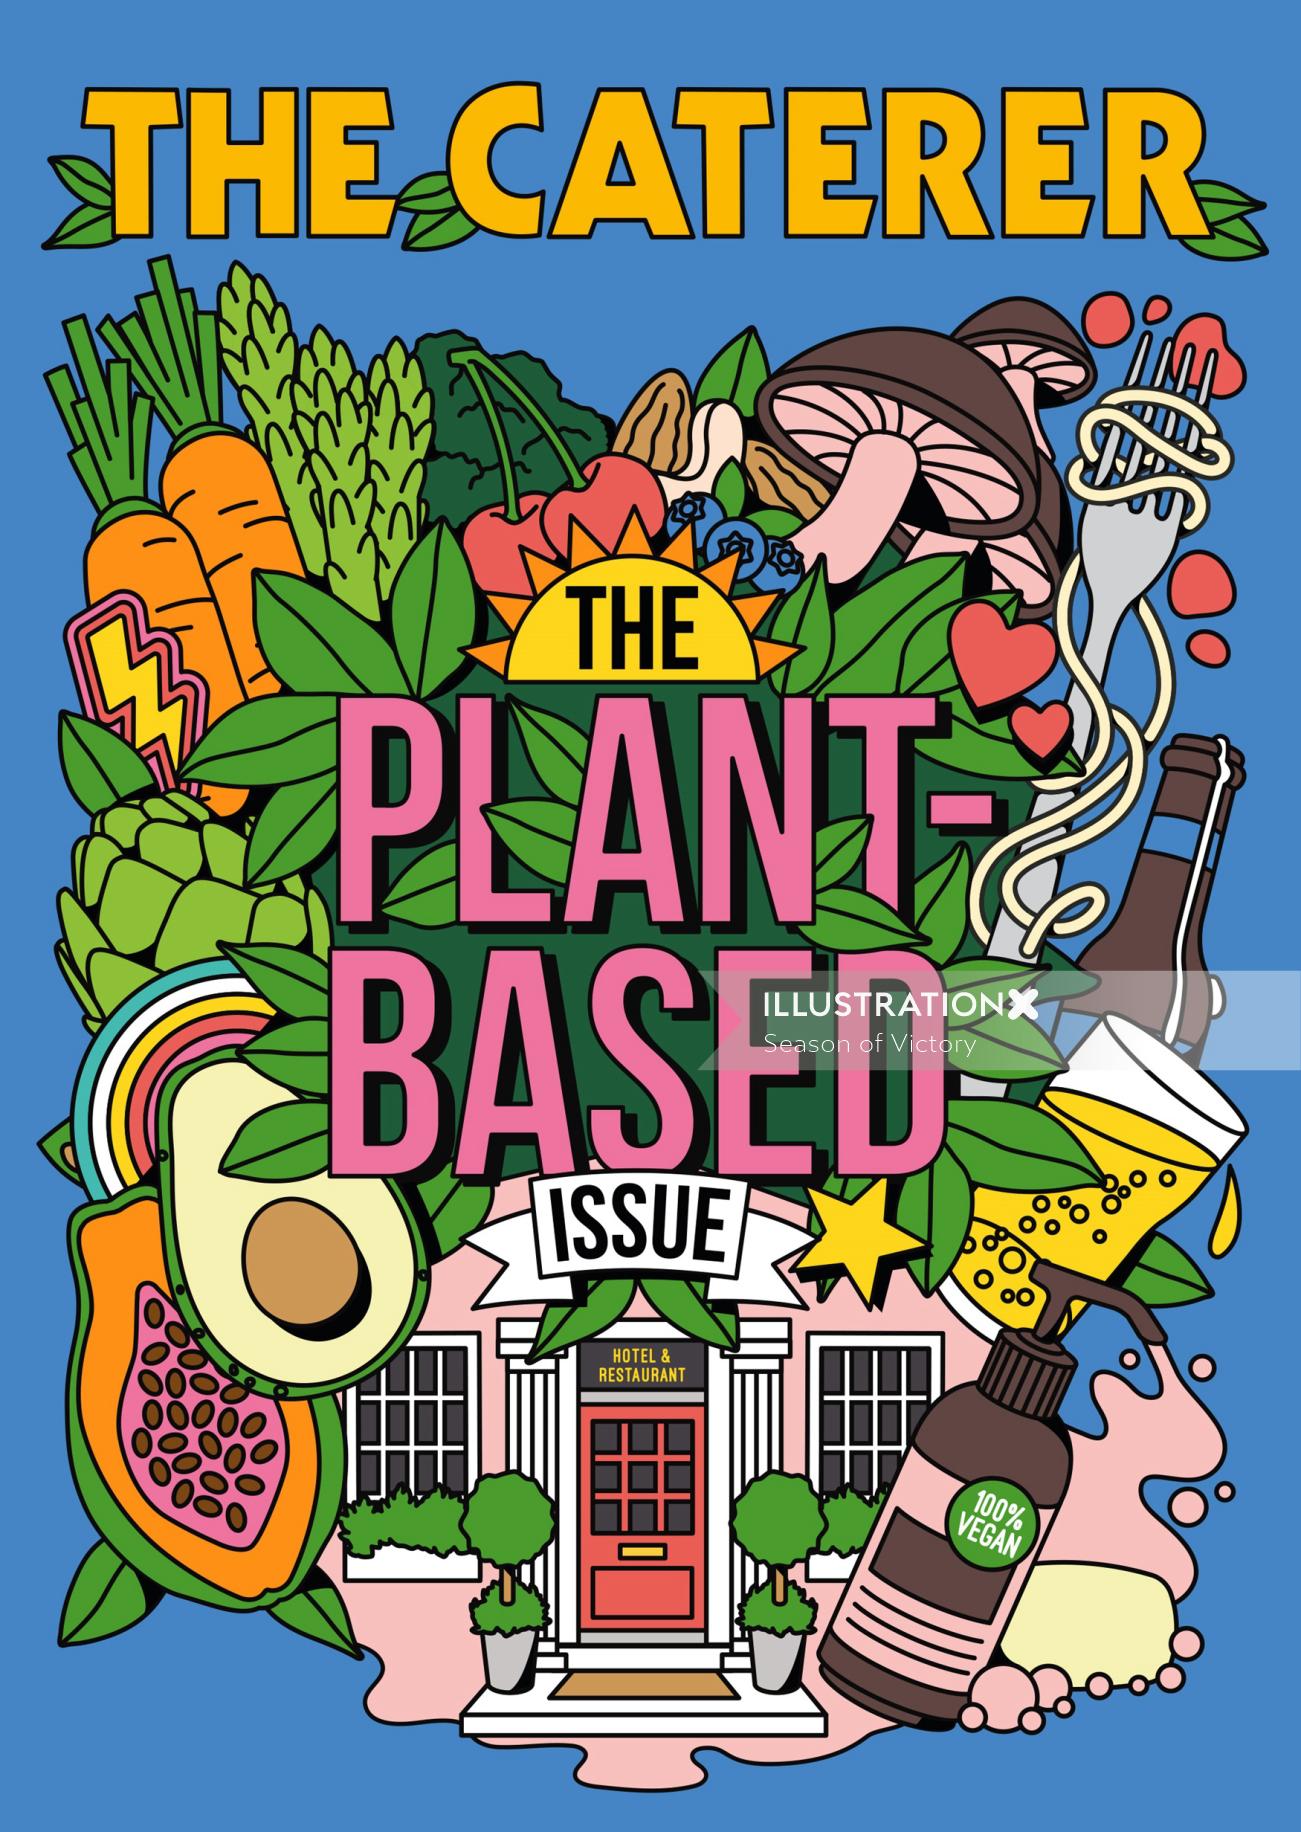 veganuary, vegan, plant-based, plantbased, vegan illustration, hospitality industry, pubs, food & dr